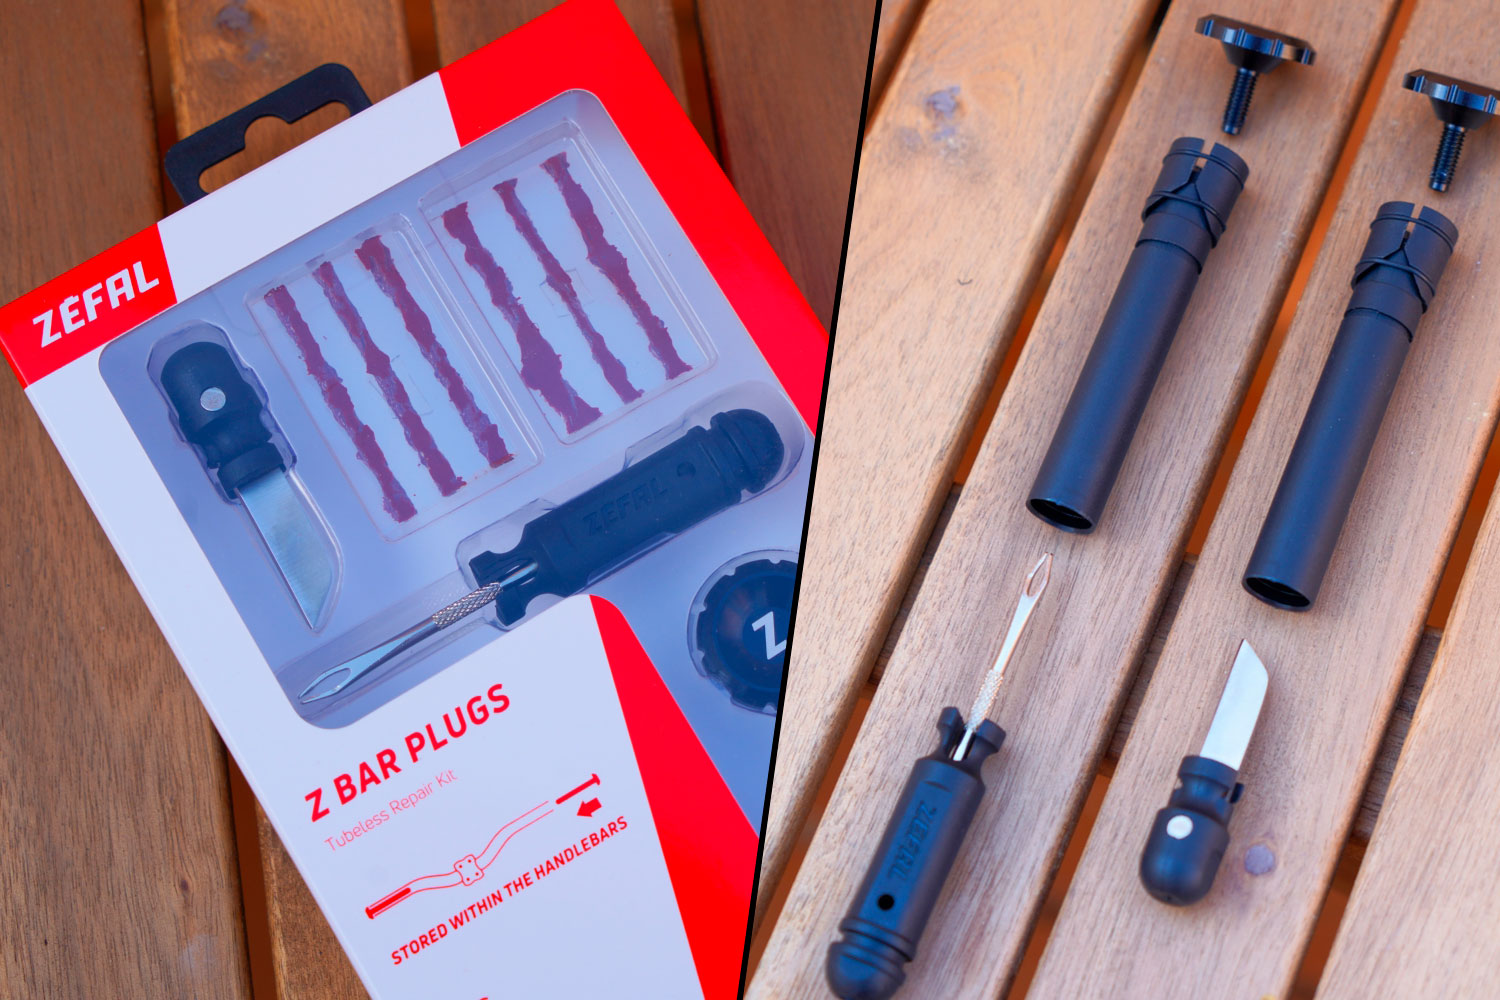 Zéfal Z Bar Plugs, un completo kit para reparar pinchazos